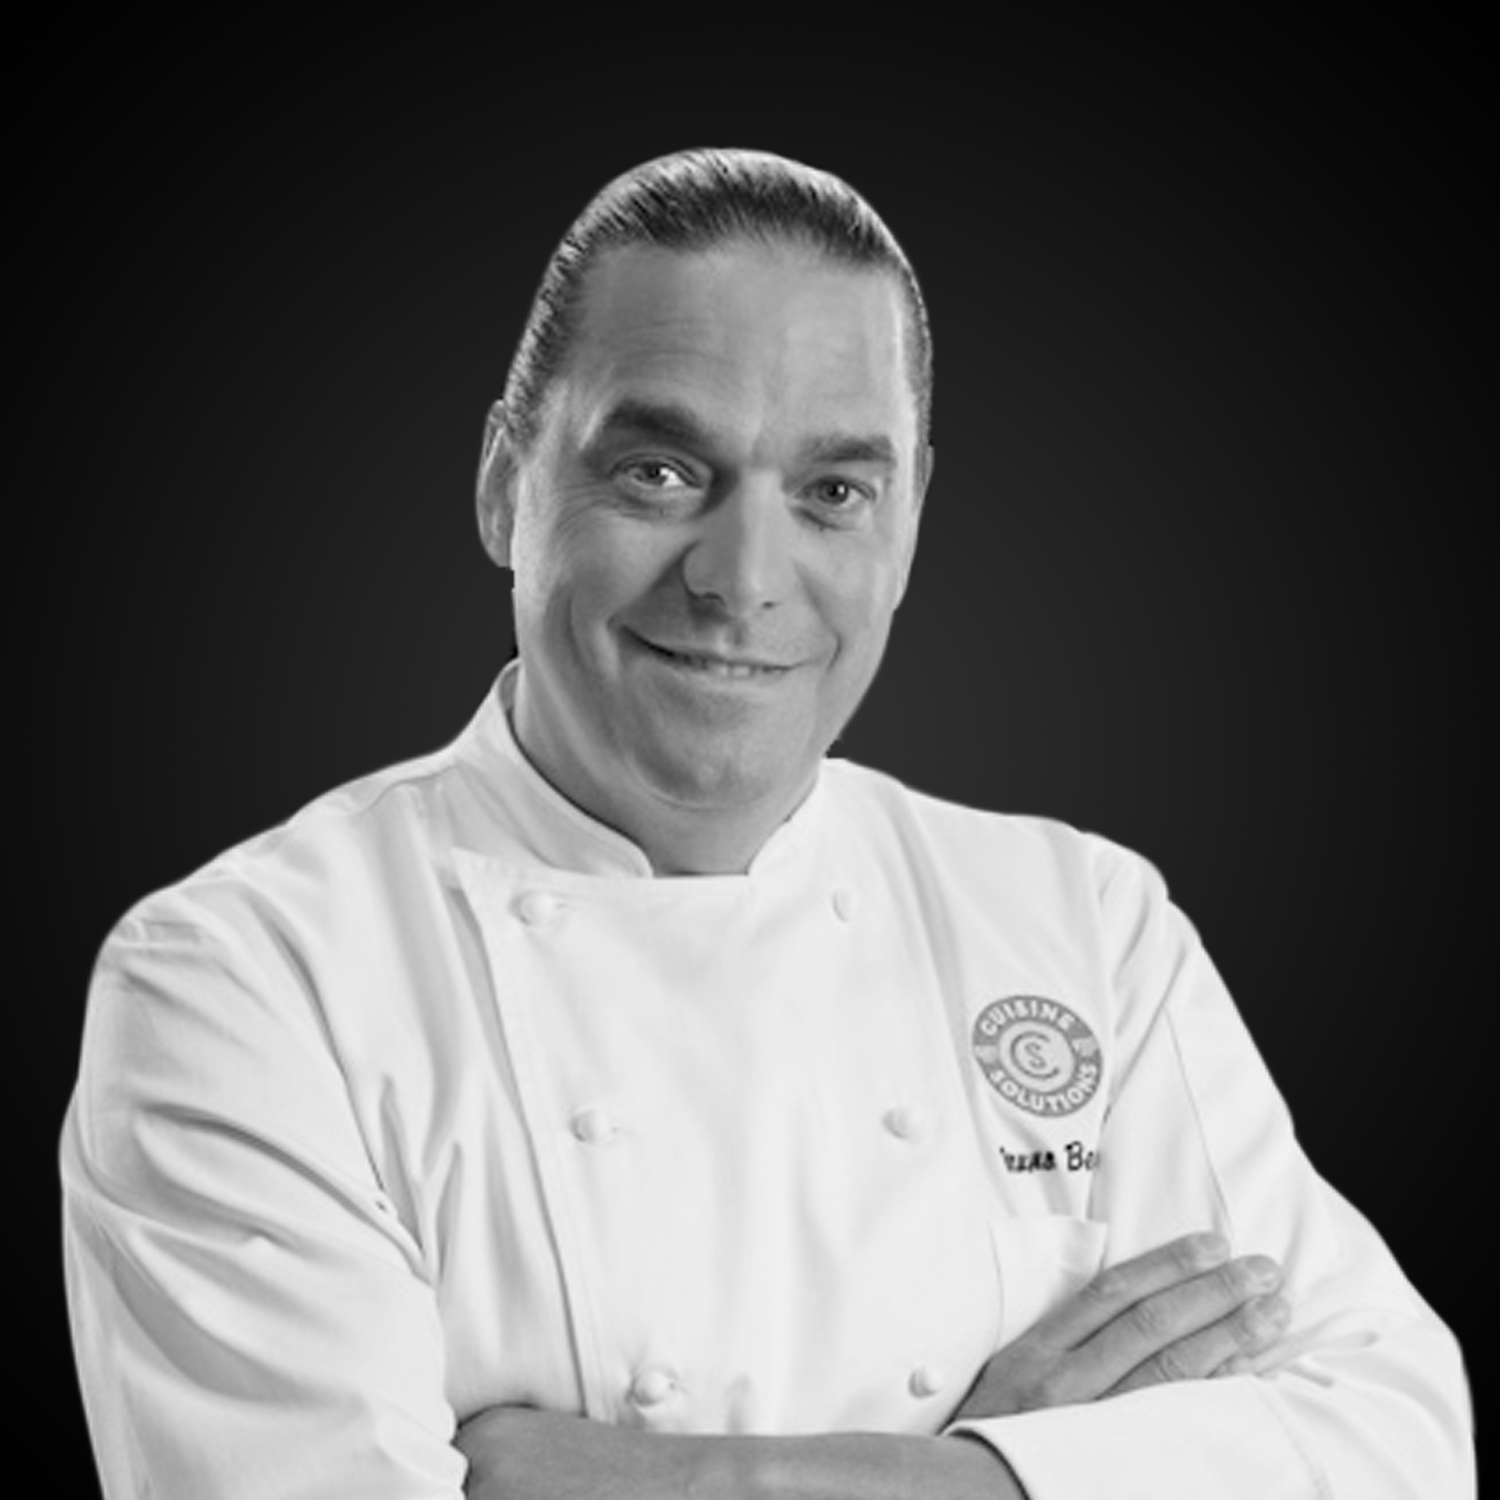 Portrait of Chef Bruno Bertin